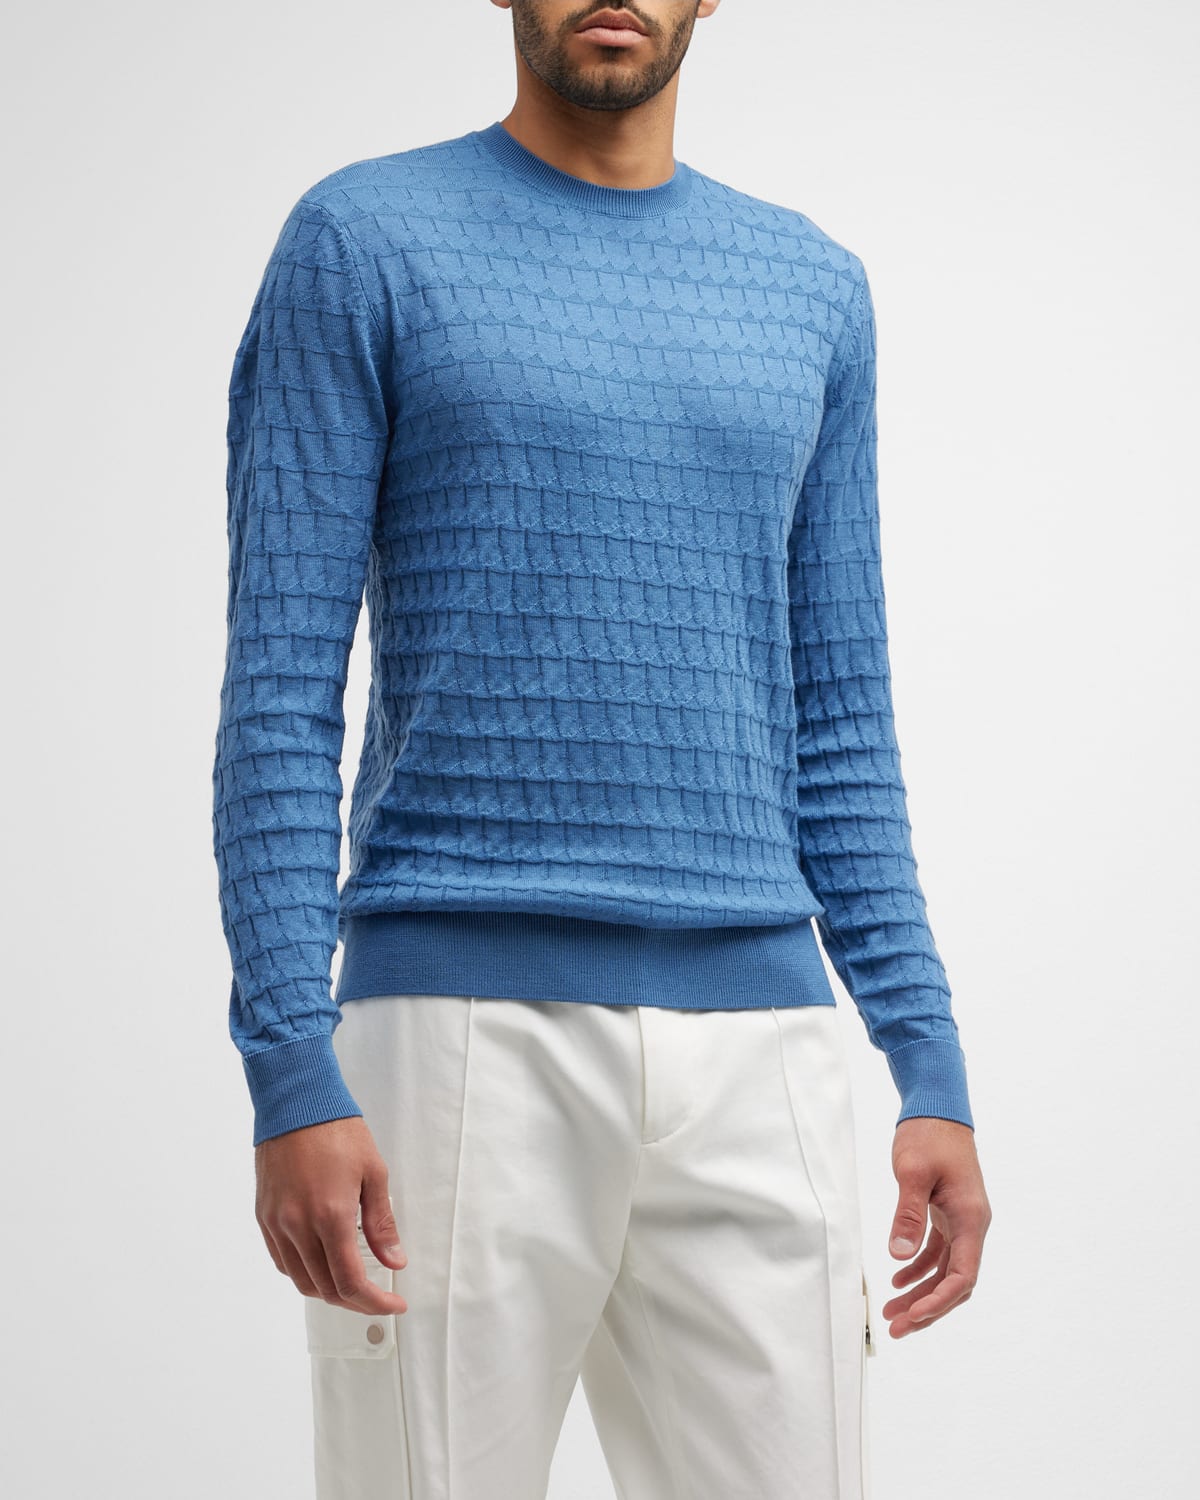 Emporio Armani Men's Wool Textured Crewneck Sweater